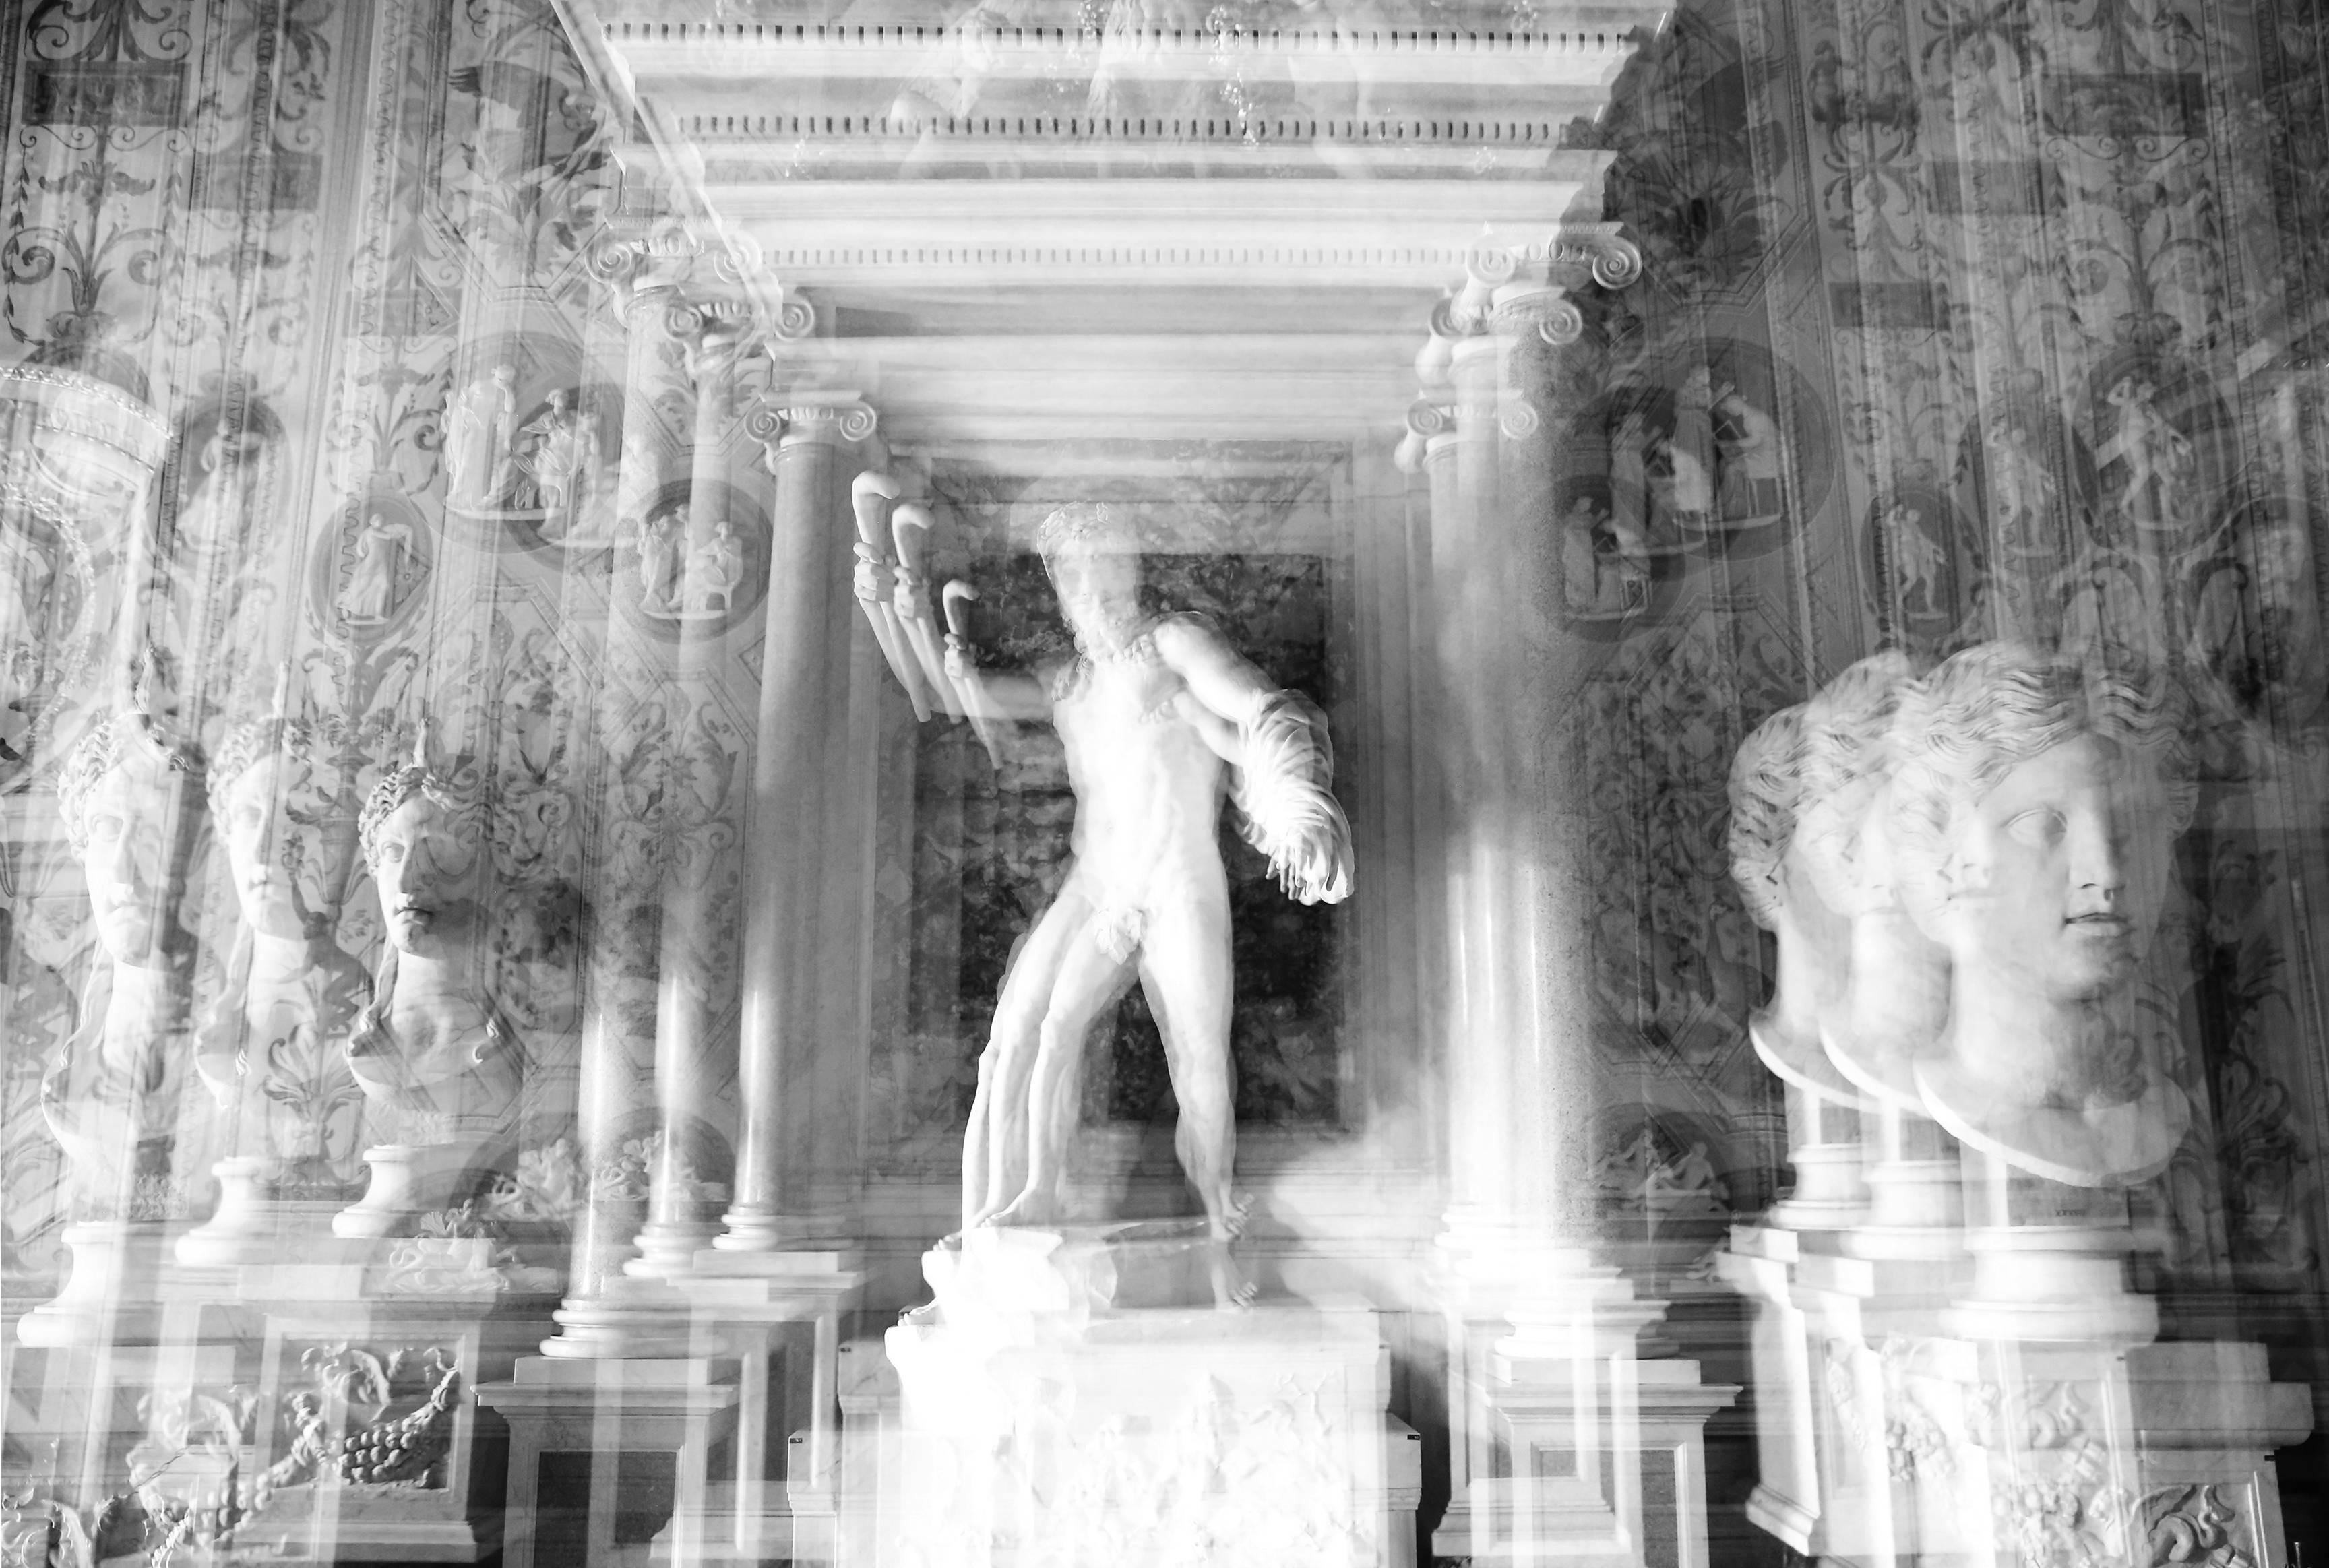 Magda Von Hanau Abstract Photograph - Villa Borghese - Rome. Abstract architectural limited edition B & W photograph